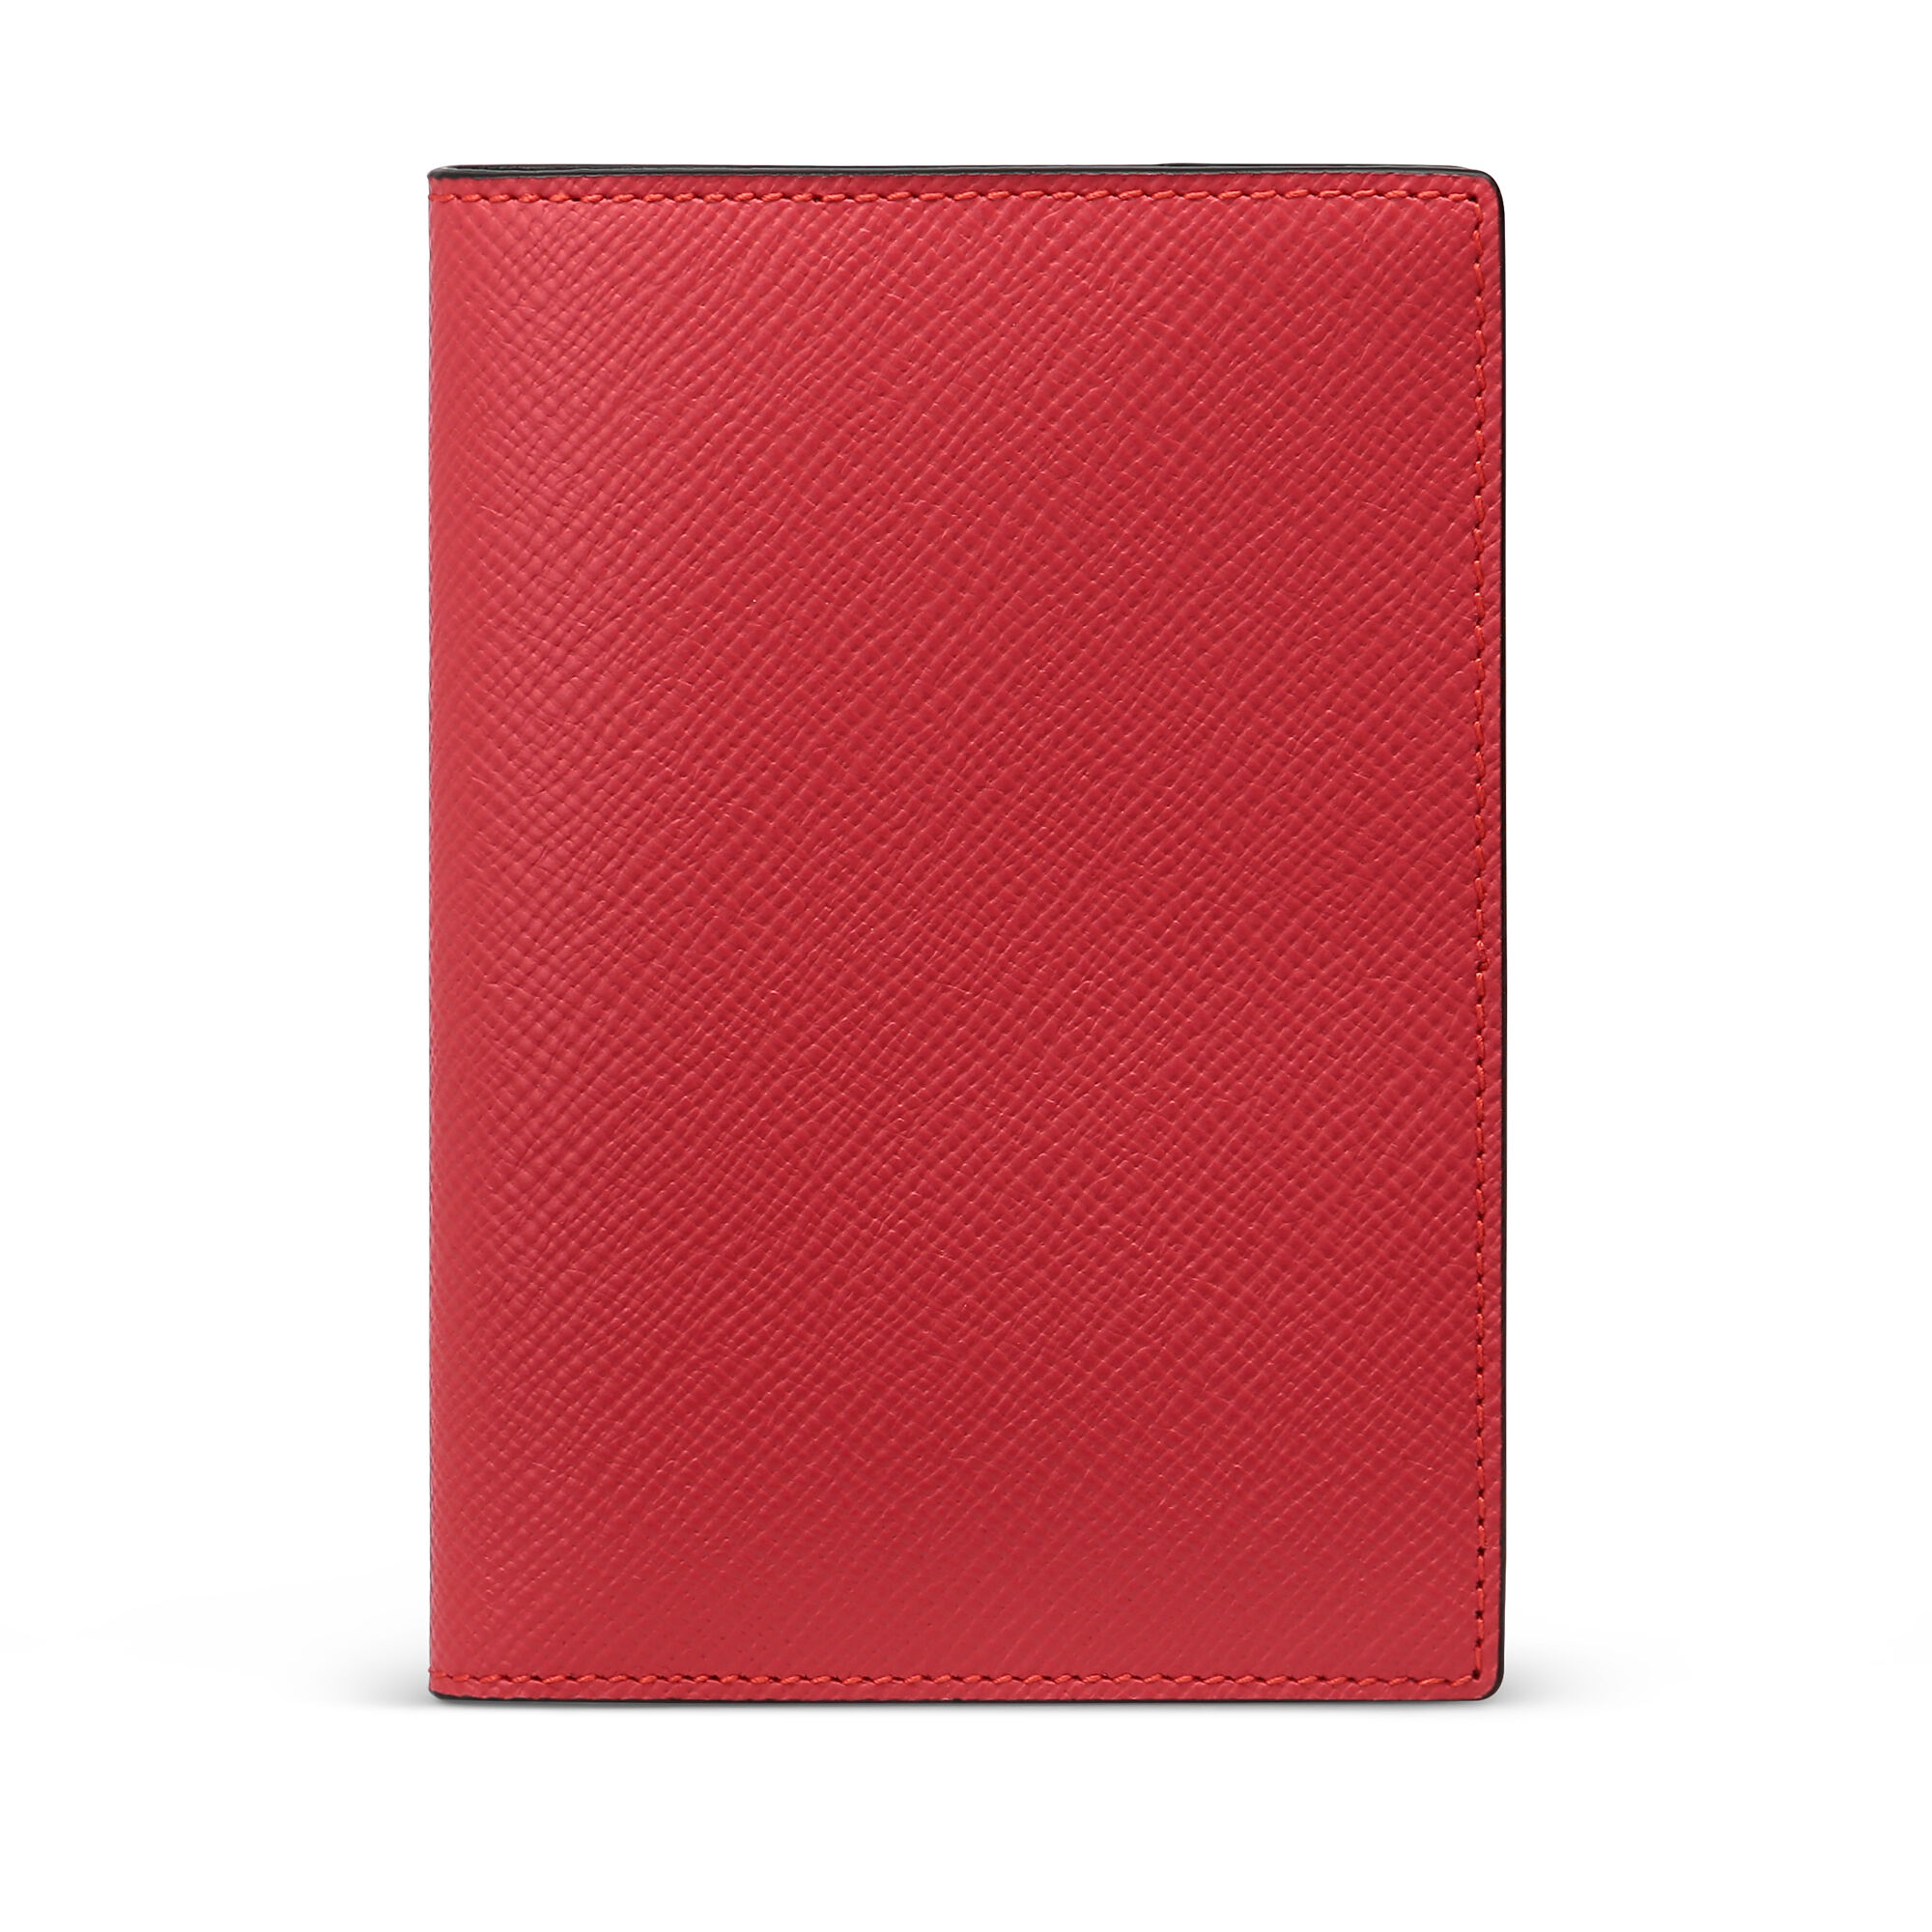 Panamaレザーパスポートカバー in scarlet red | Smythson